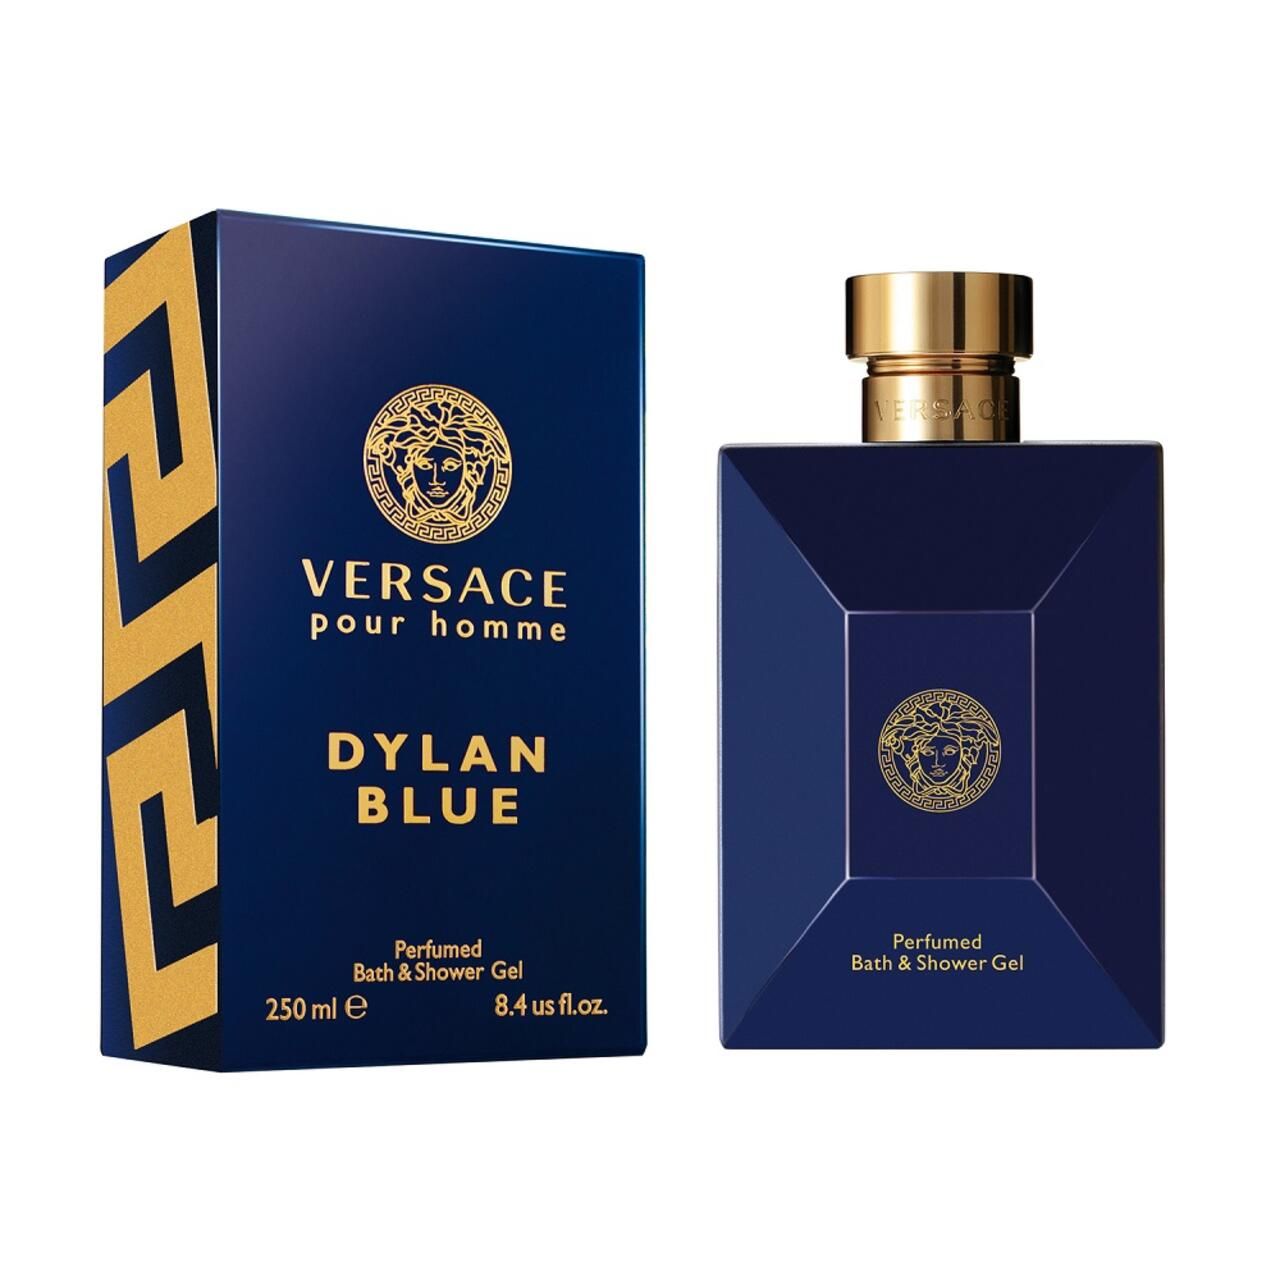 Versace Dylan Blue Bath & Shower Gel